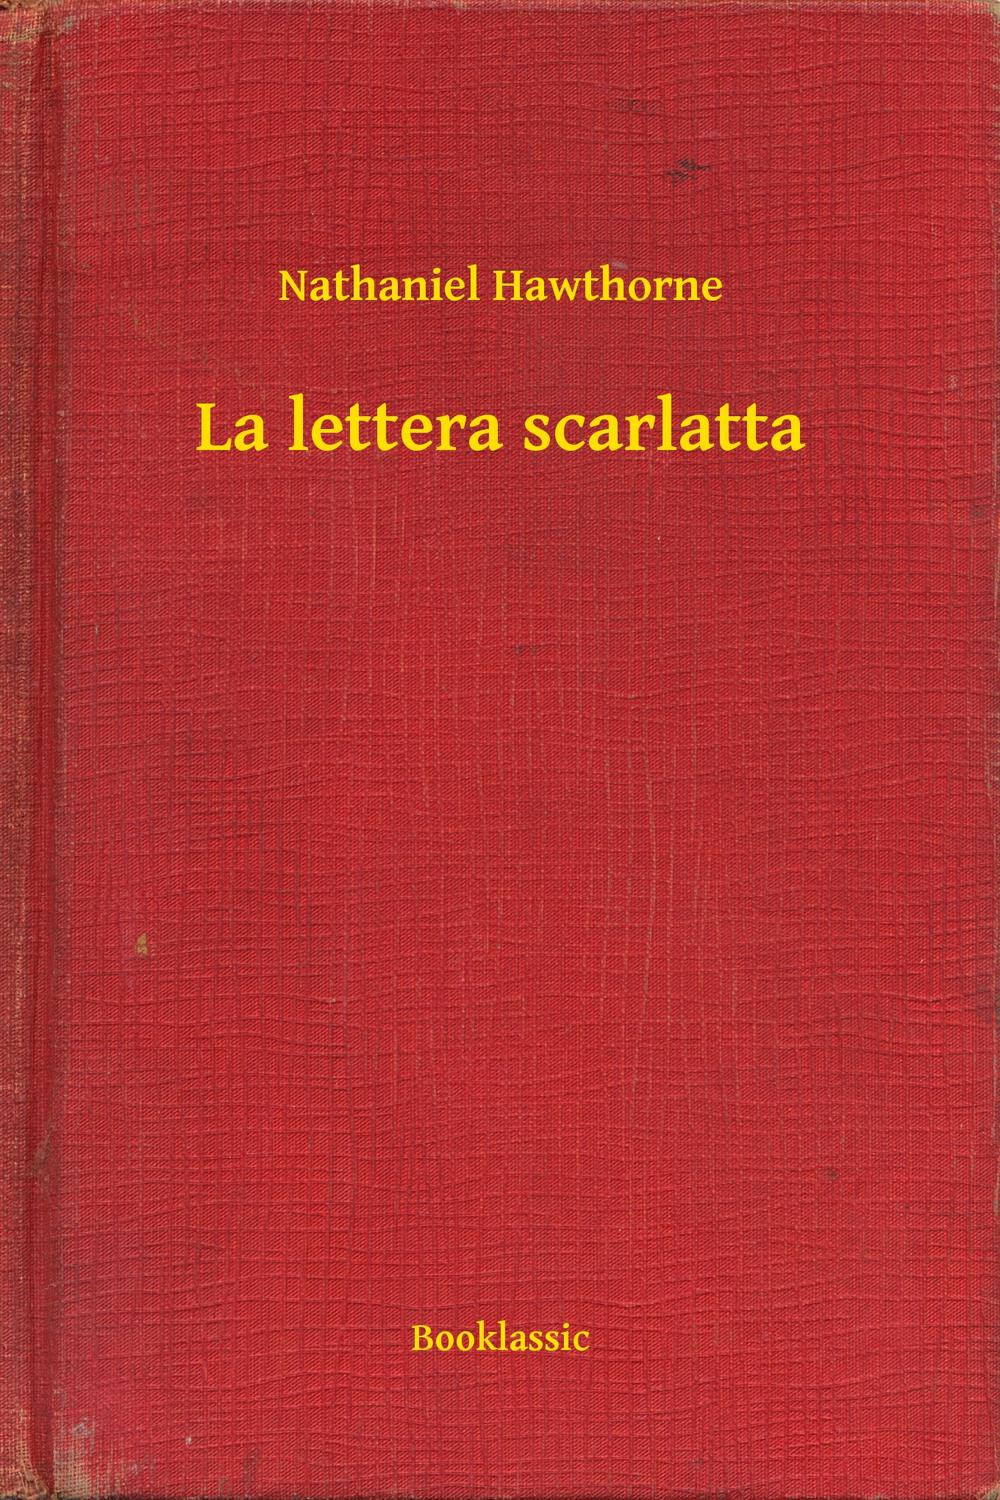 La lettera scarlatta - Nathaniel Hawthorne,,